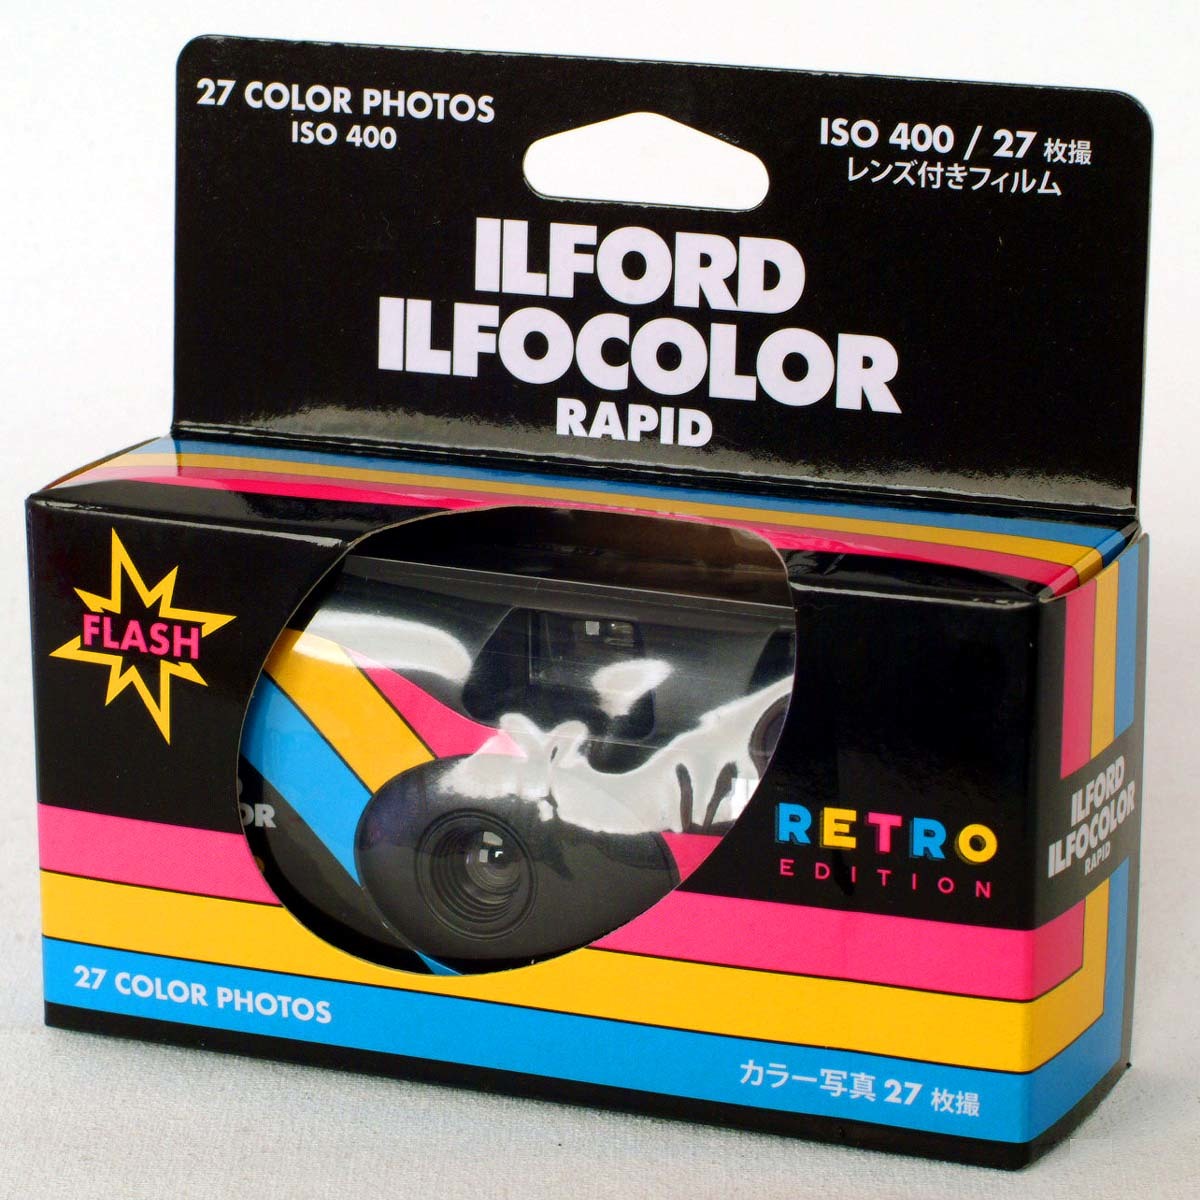 [2024-7 time limit ] il fo color lapido retro 400-27 sheets .[1 piece ] il Ford ILFORD[ prompt decision ] disposable camera * lens attaching film 